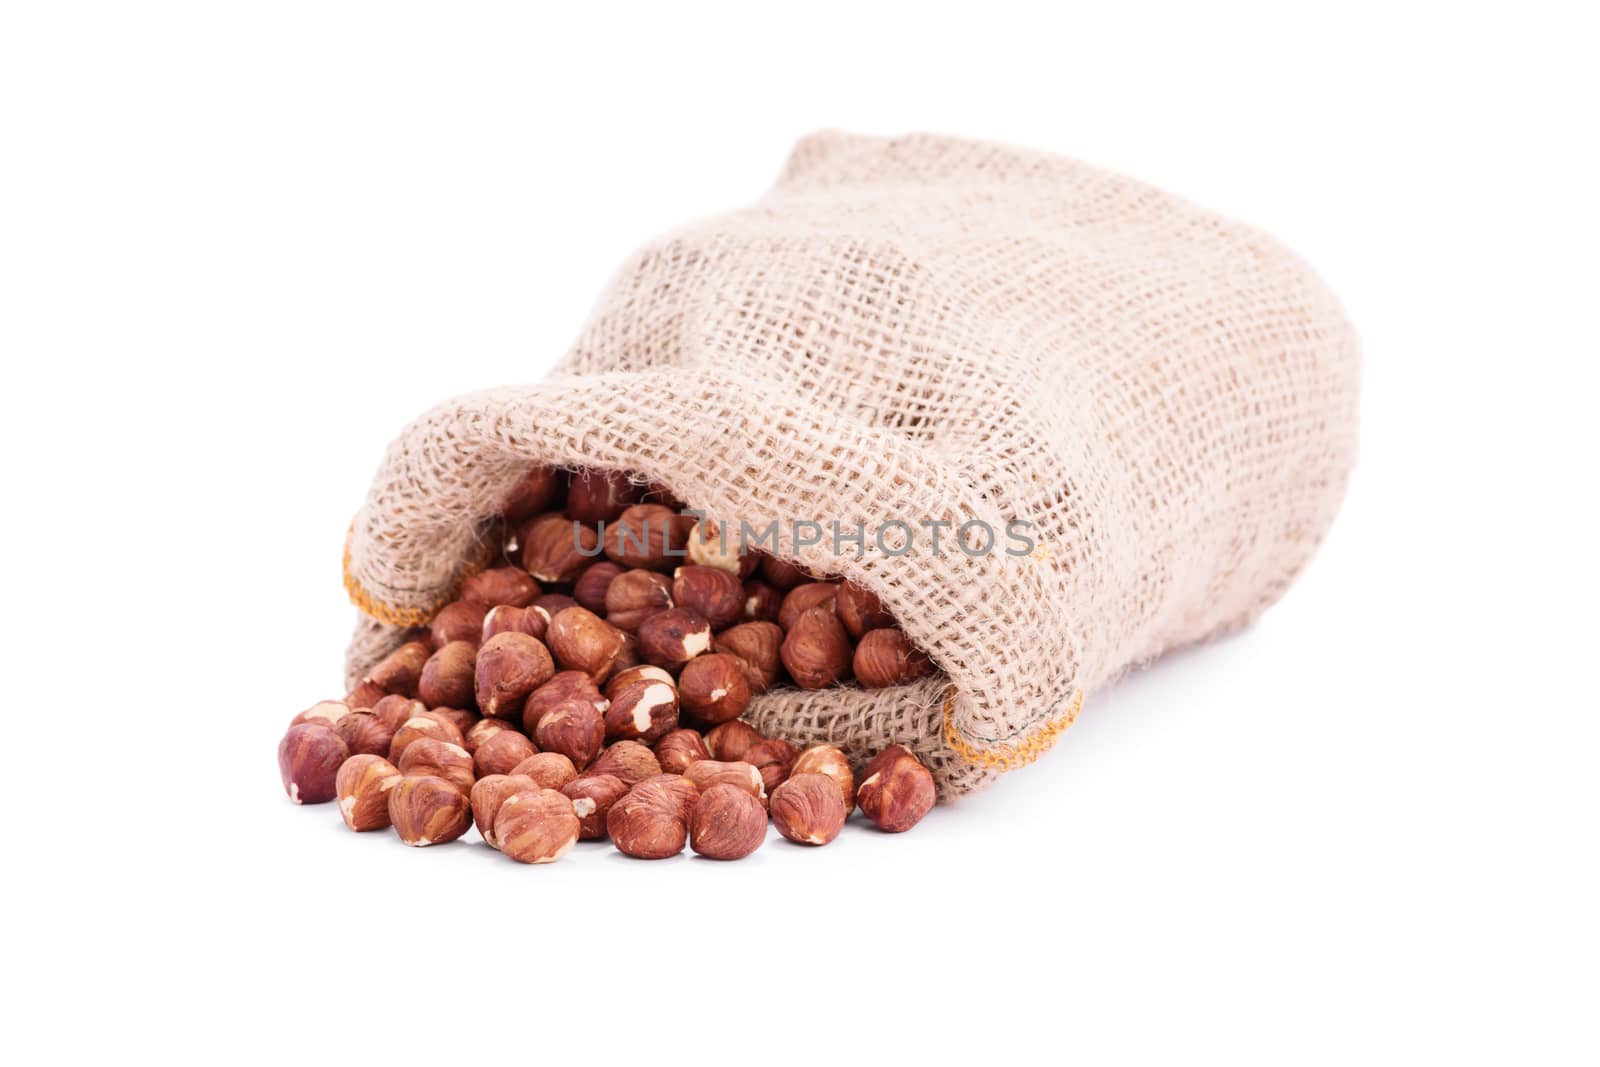 Spilled sack of hazelnuts by Mendelex